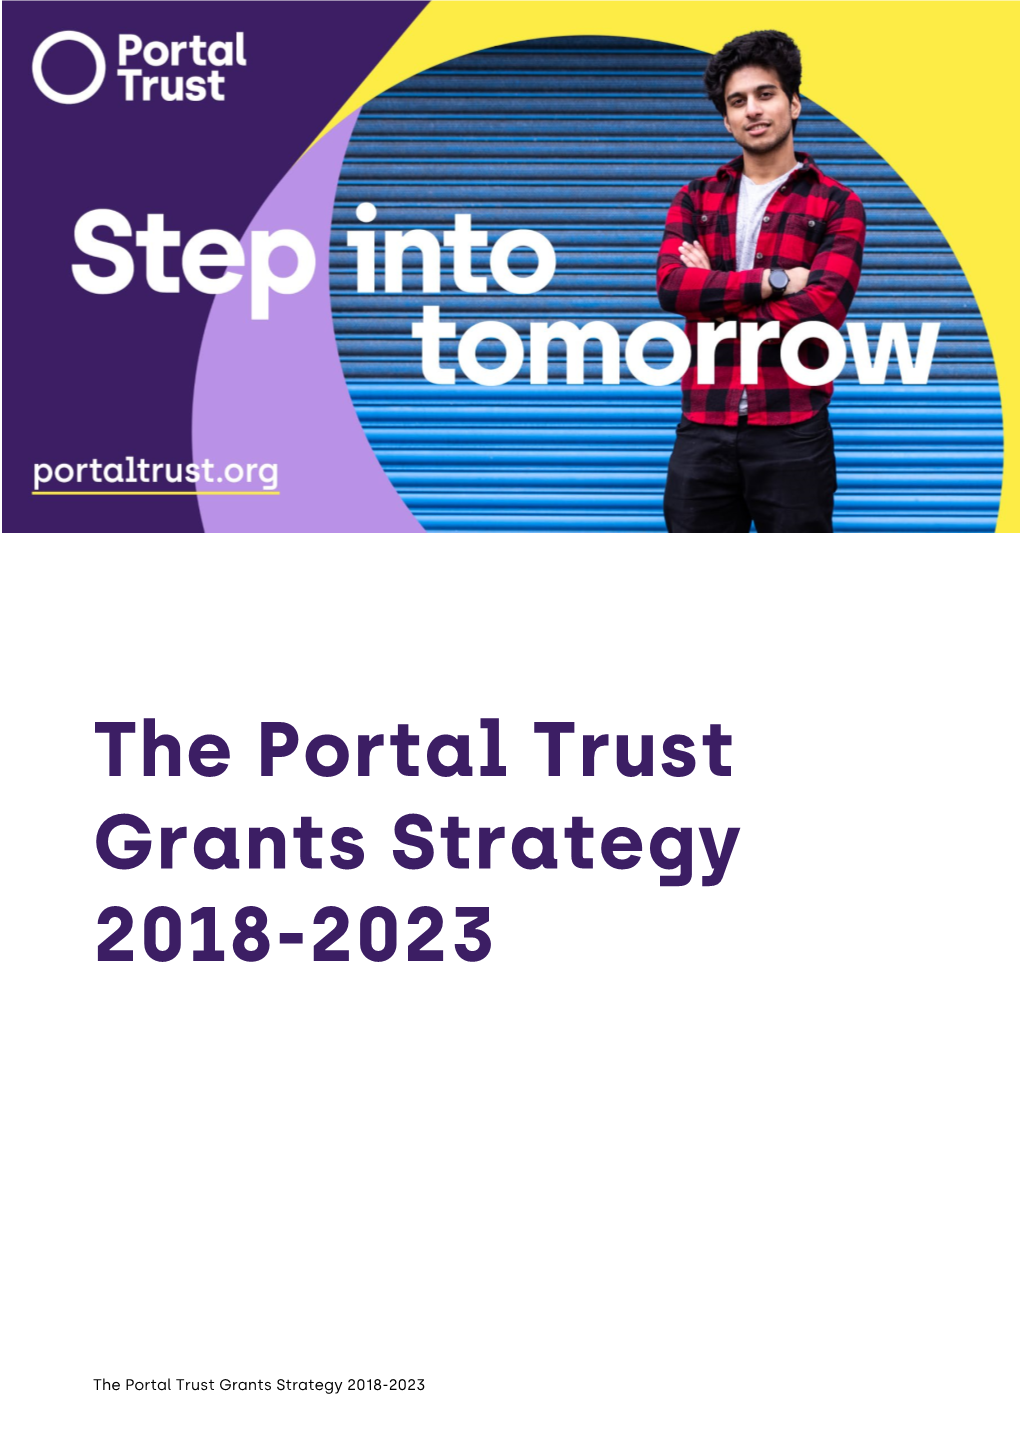 The Portal Trust Grants Strategy 2018-2023